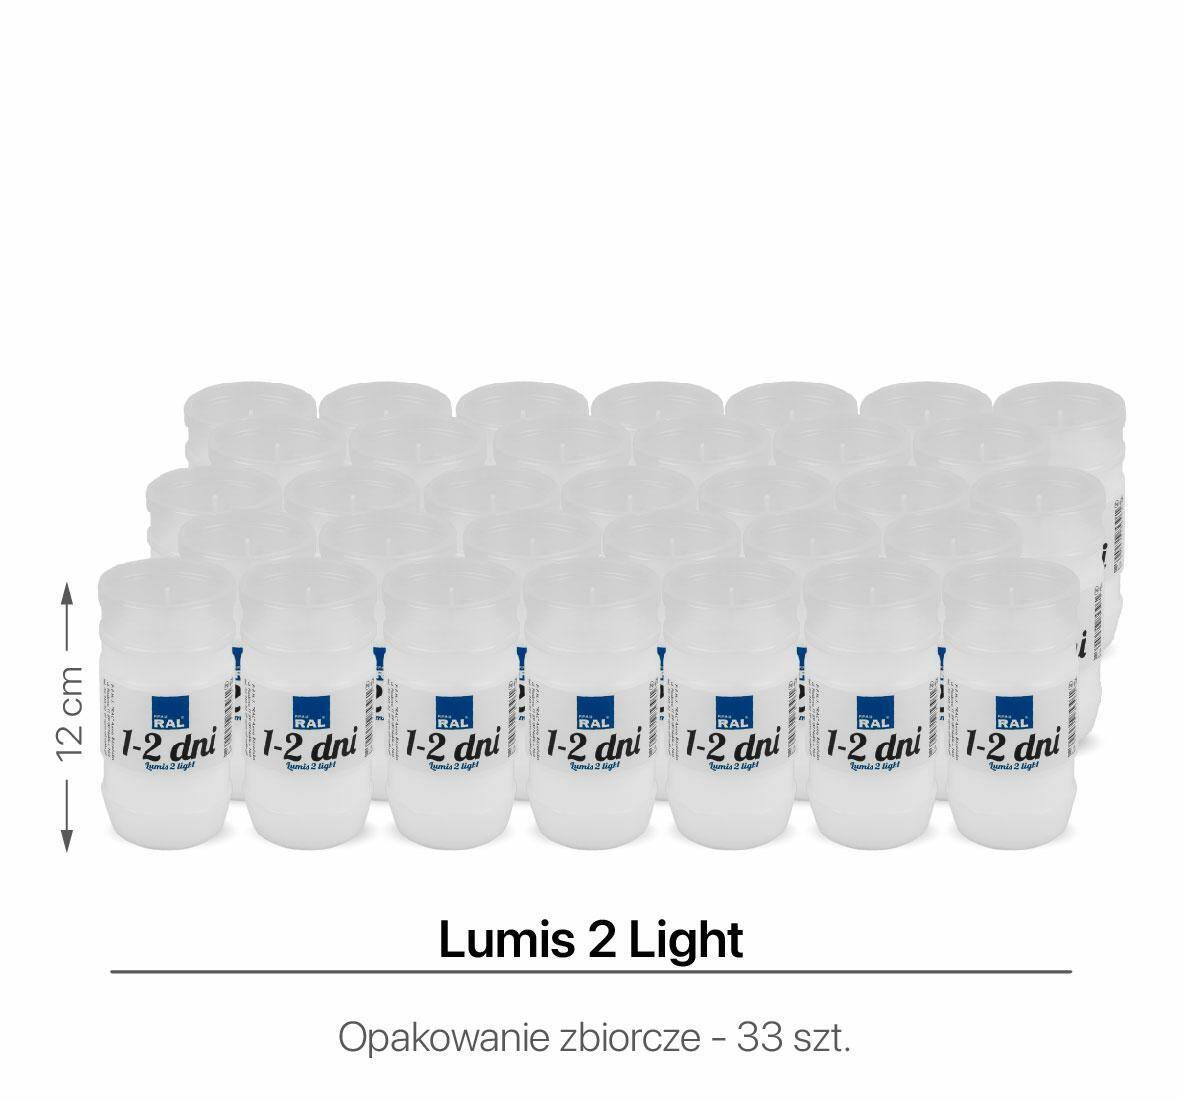 Lumis 2 Light (opakowanie 33 szt.)